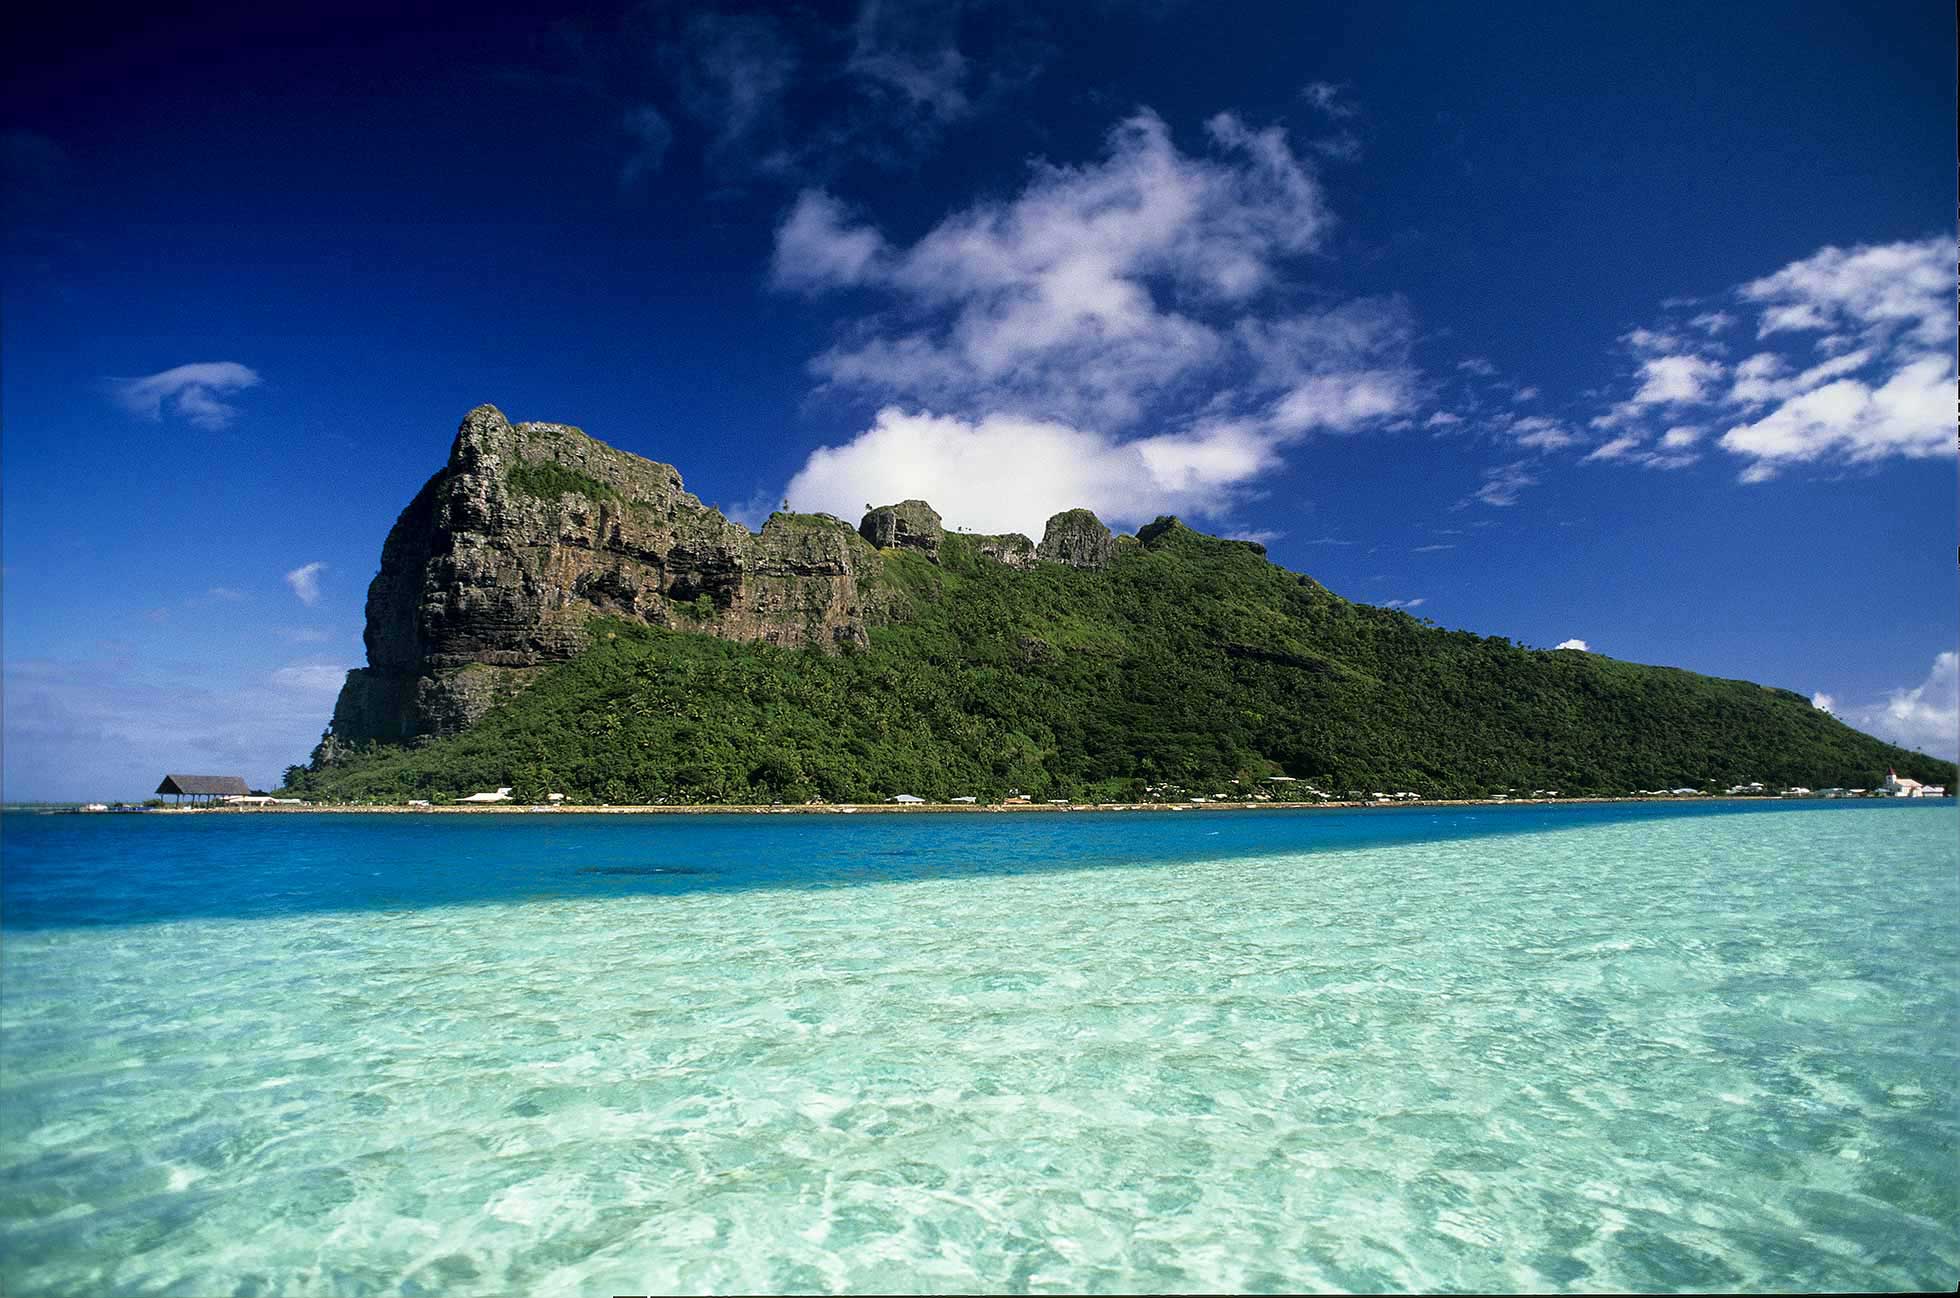 Maupiti Island